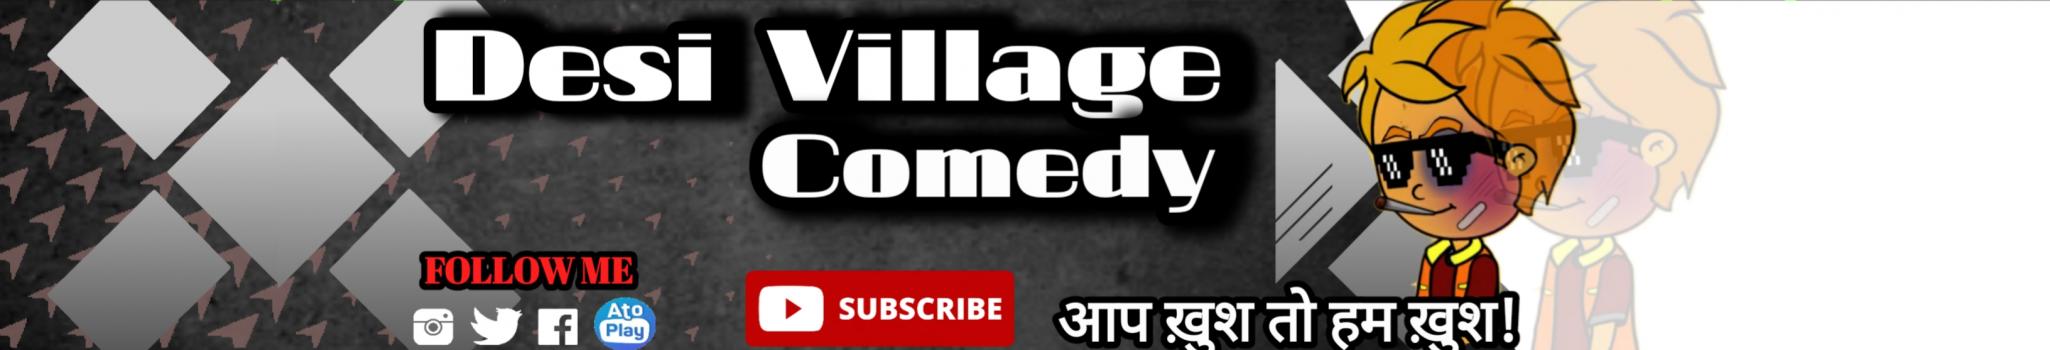 Desi Village Comedy